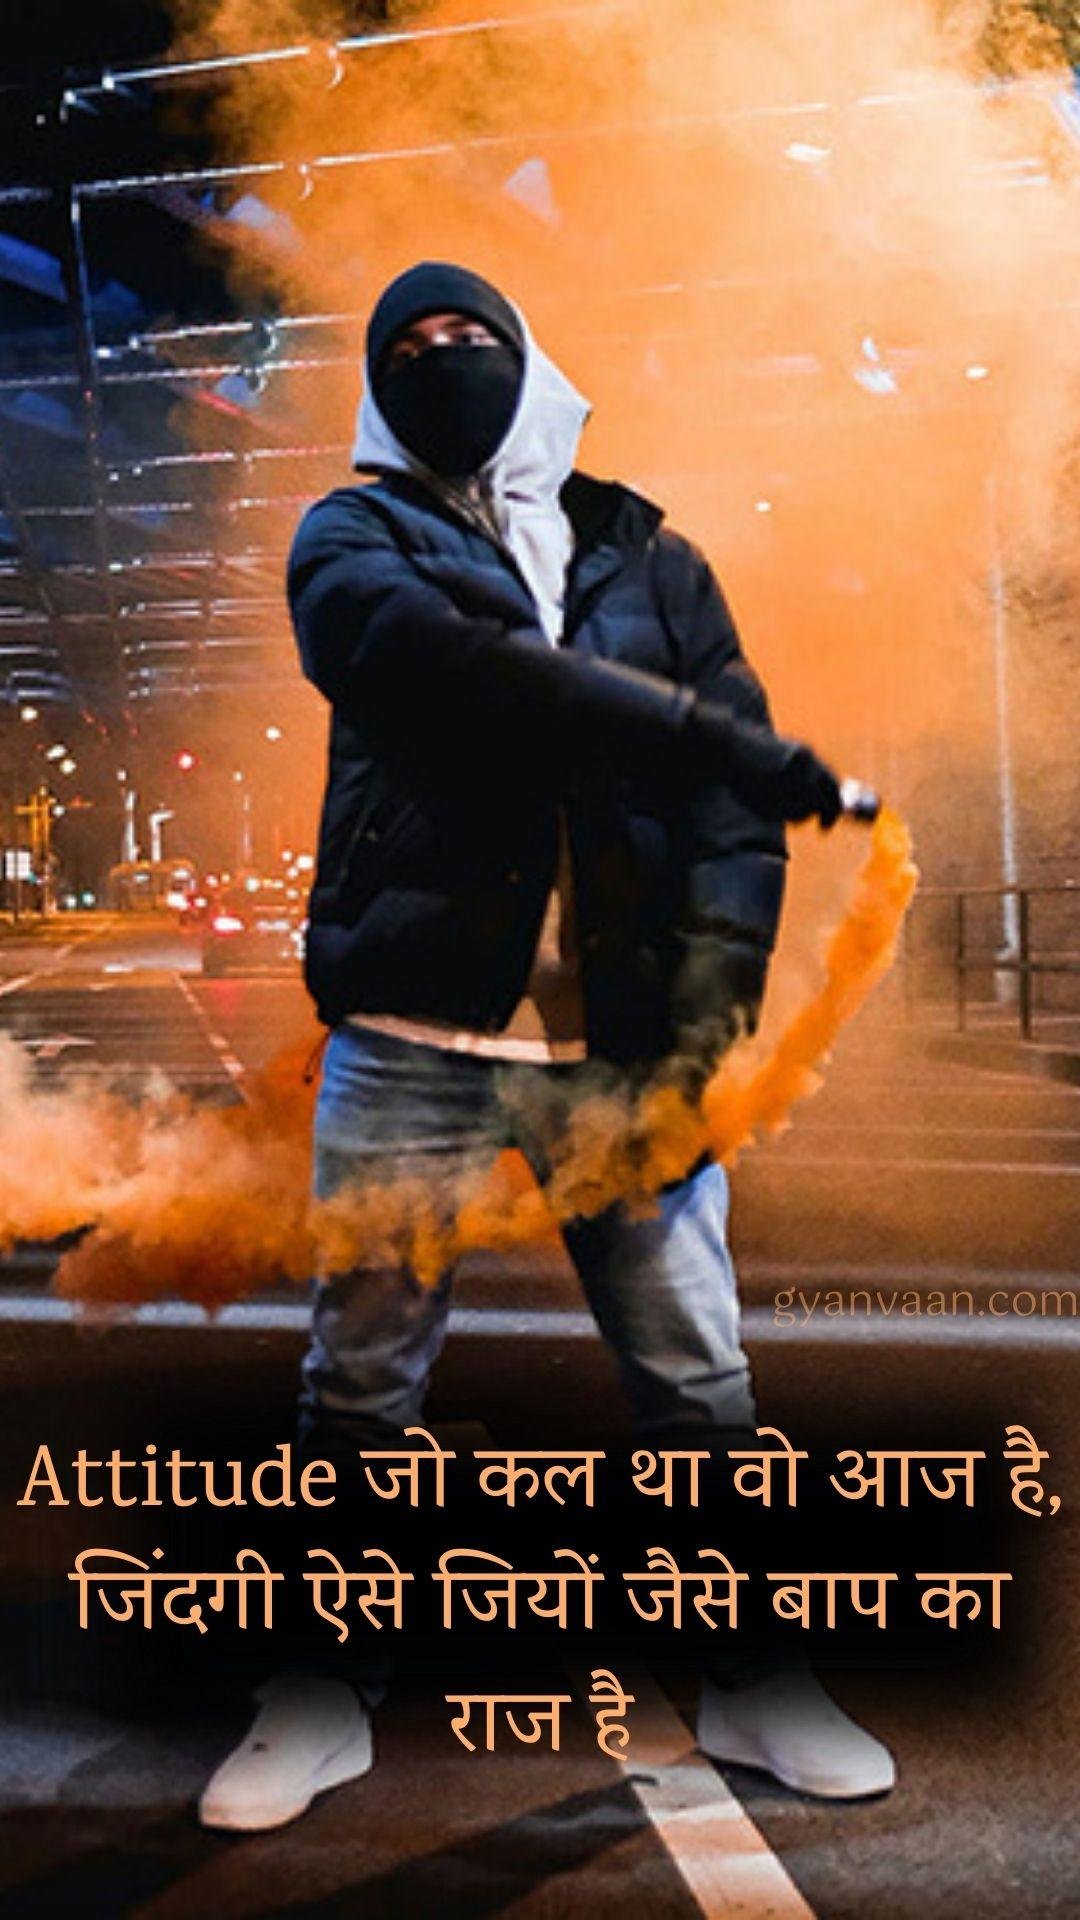 Attitude Images For Mobile 20 - Attitude Shayari